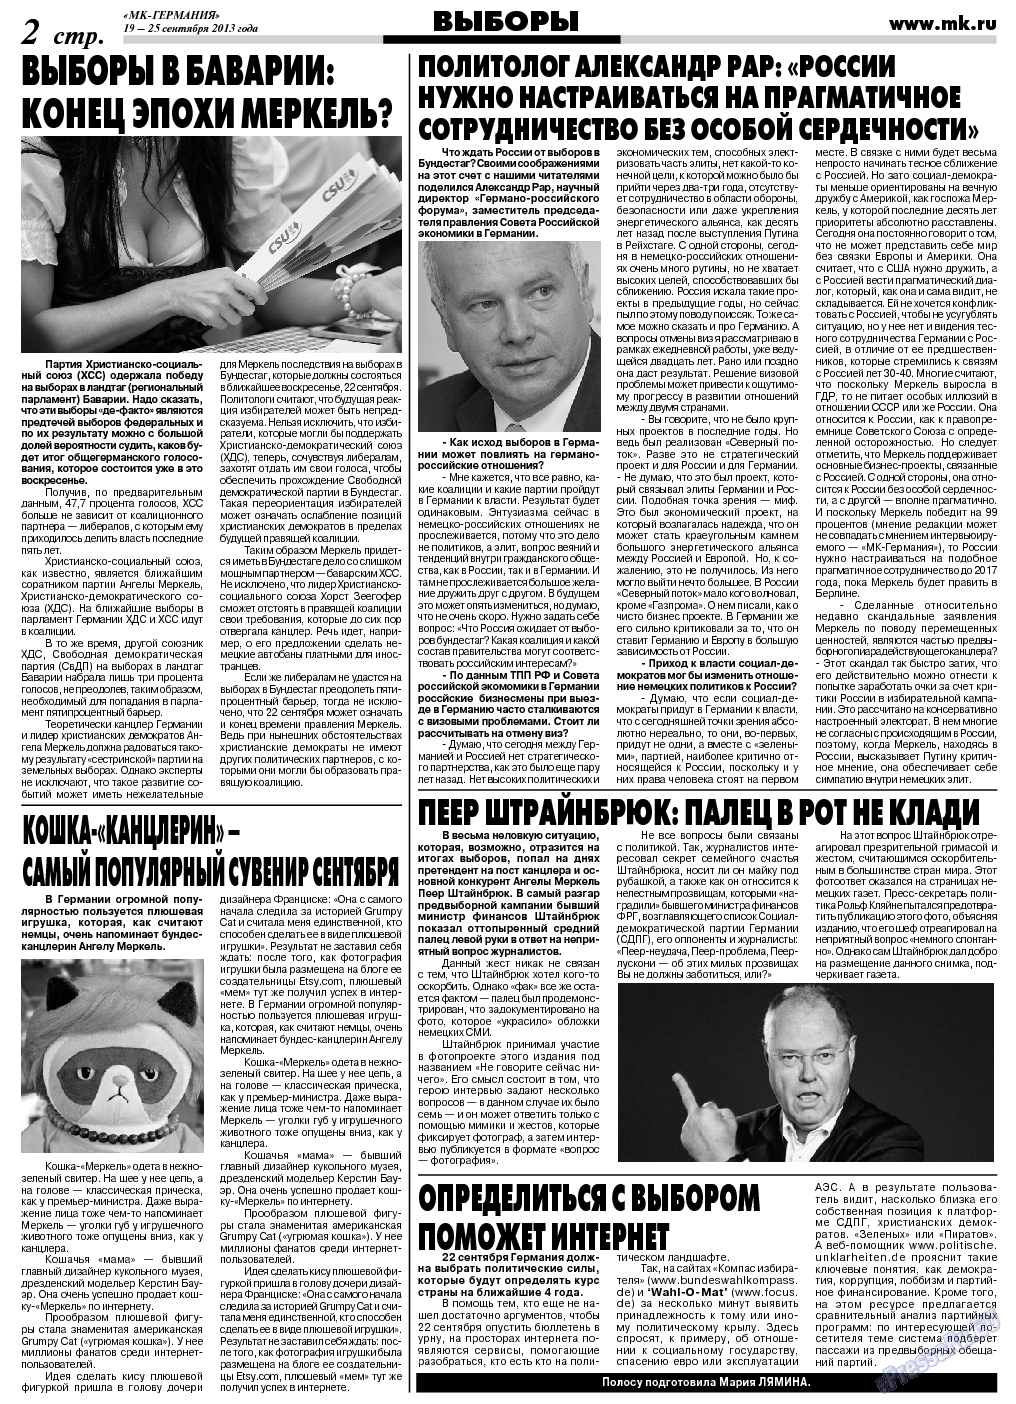 МК-Германия, газета. 2013 №38 стр.2